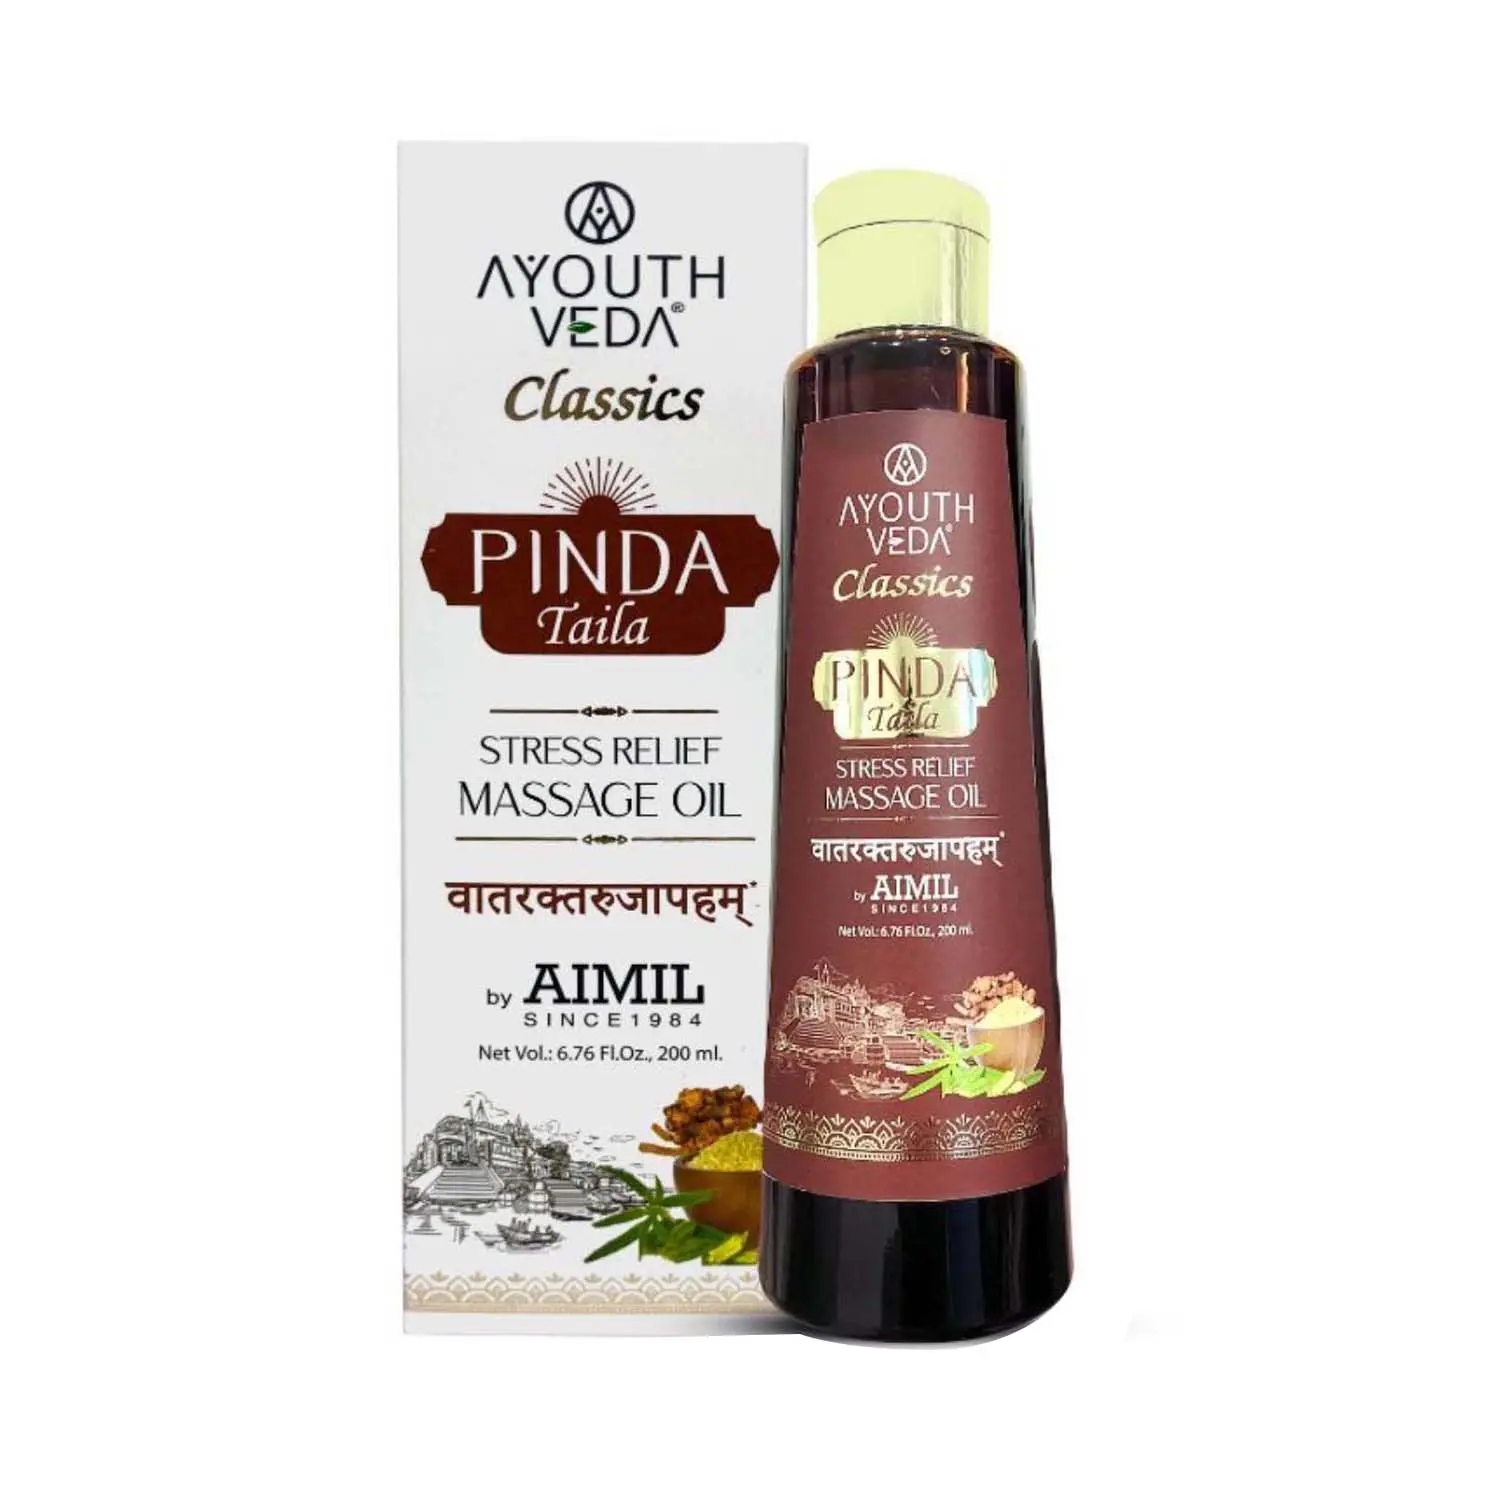 Ayouthveda Pinda Taila Stress Relief Massage Oil (200ml)